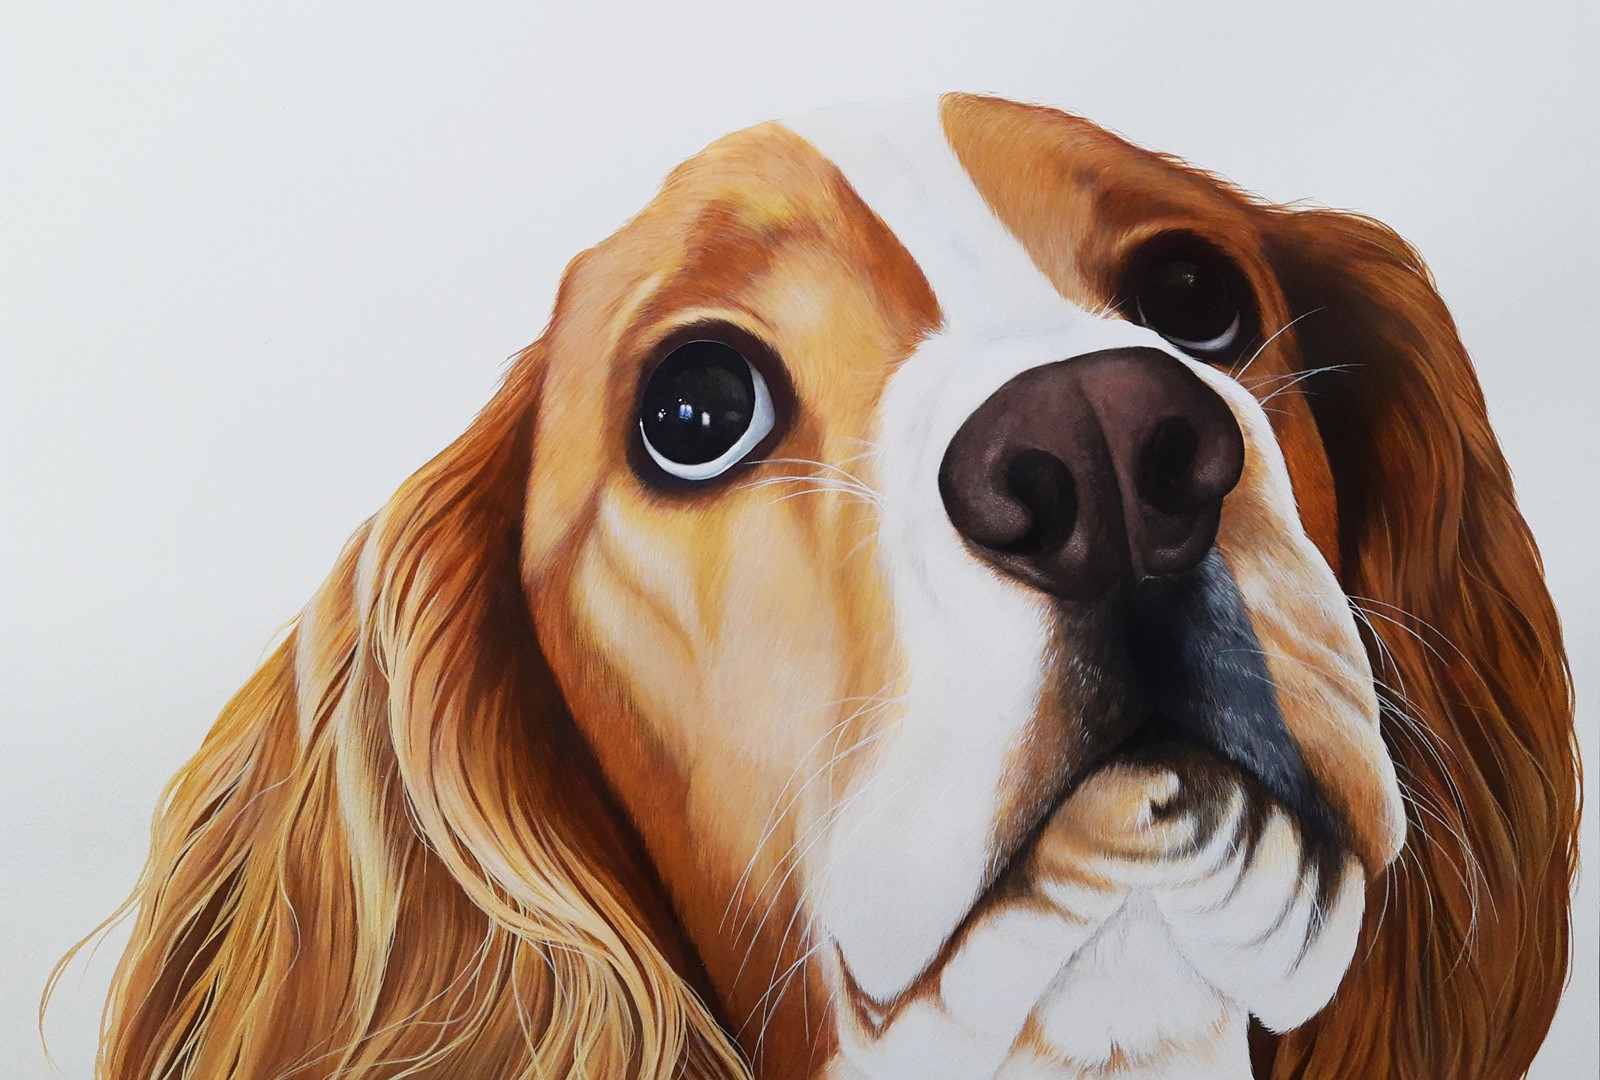 A watercolour dog portrait by Holly Khraibani